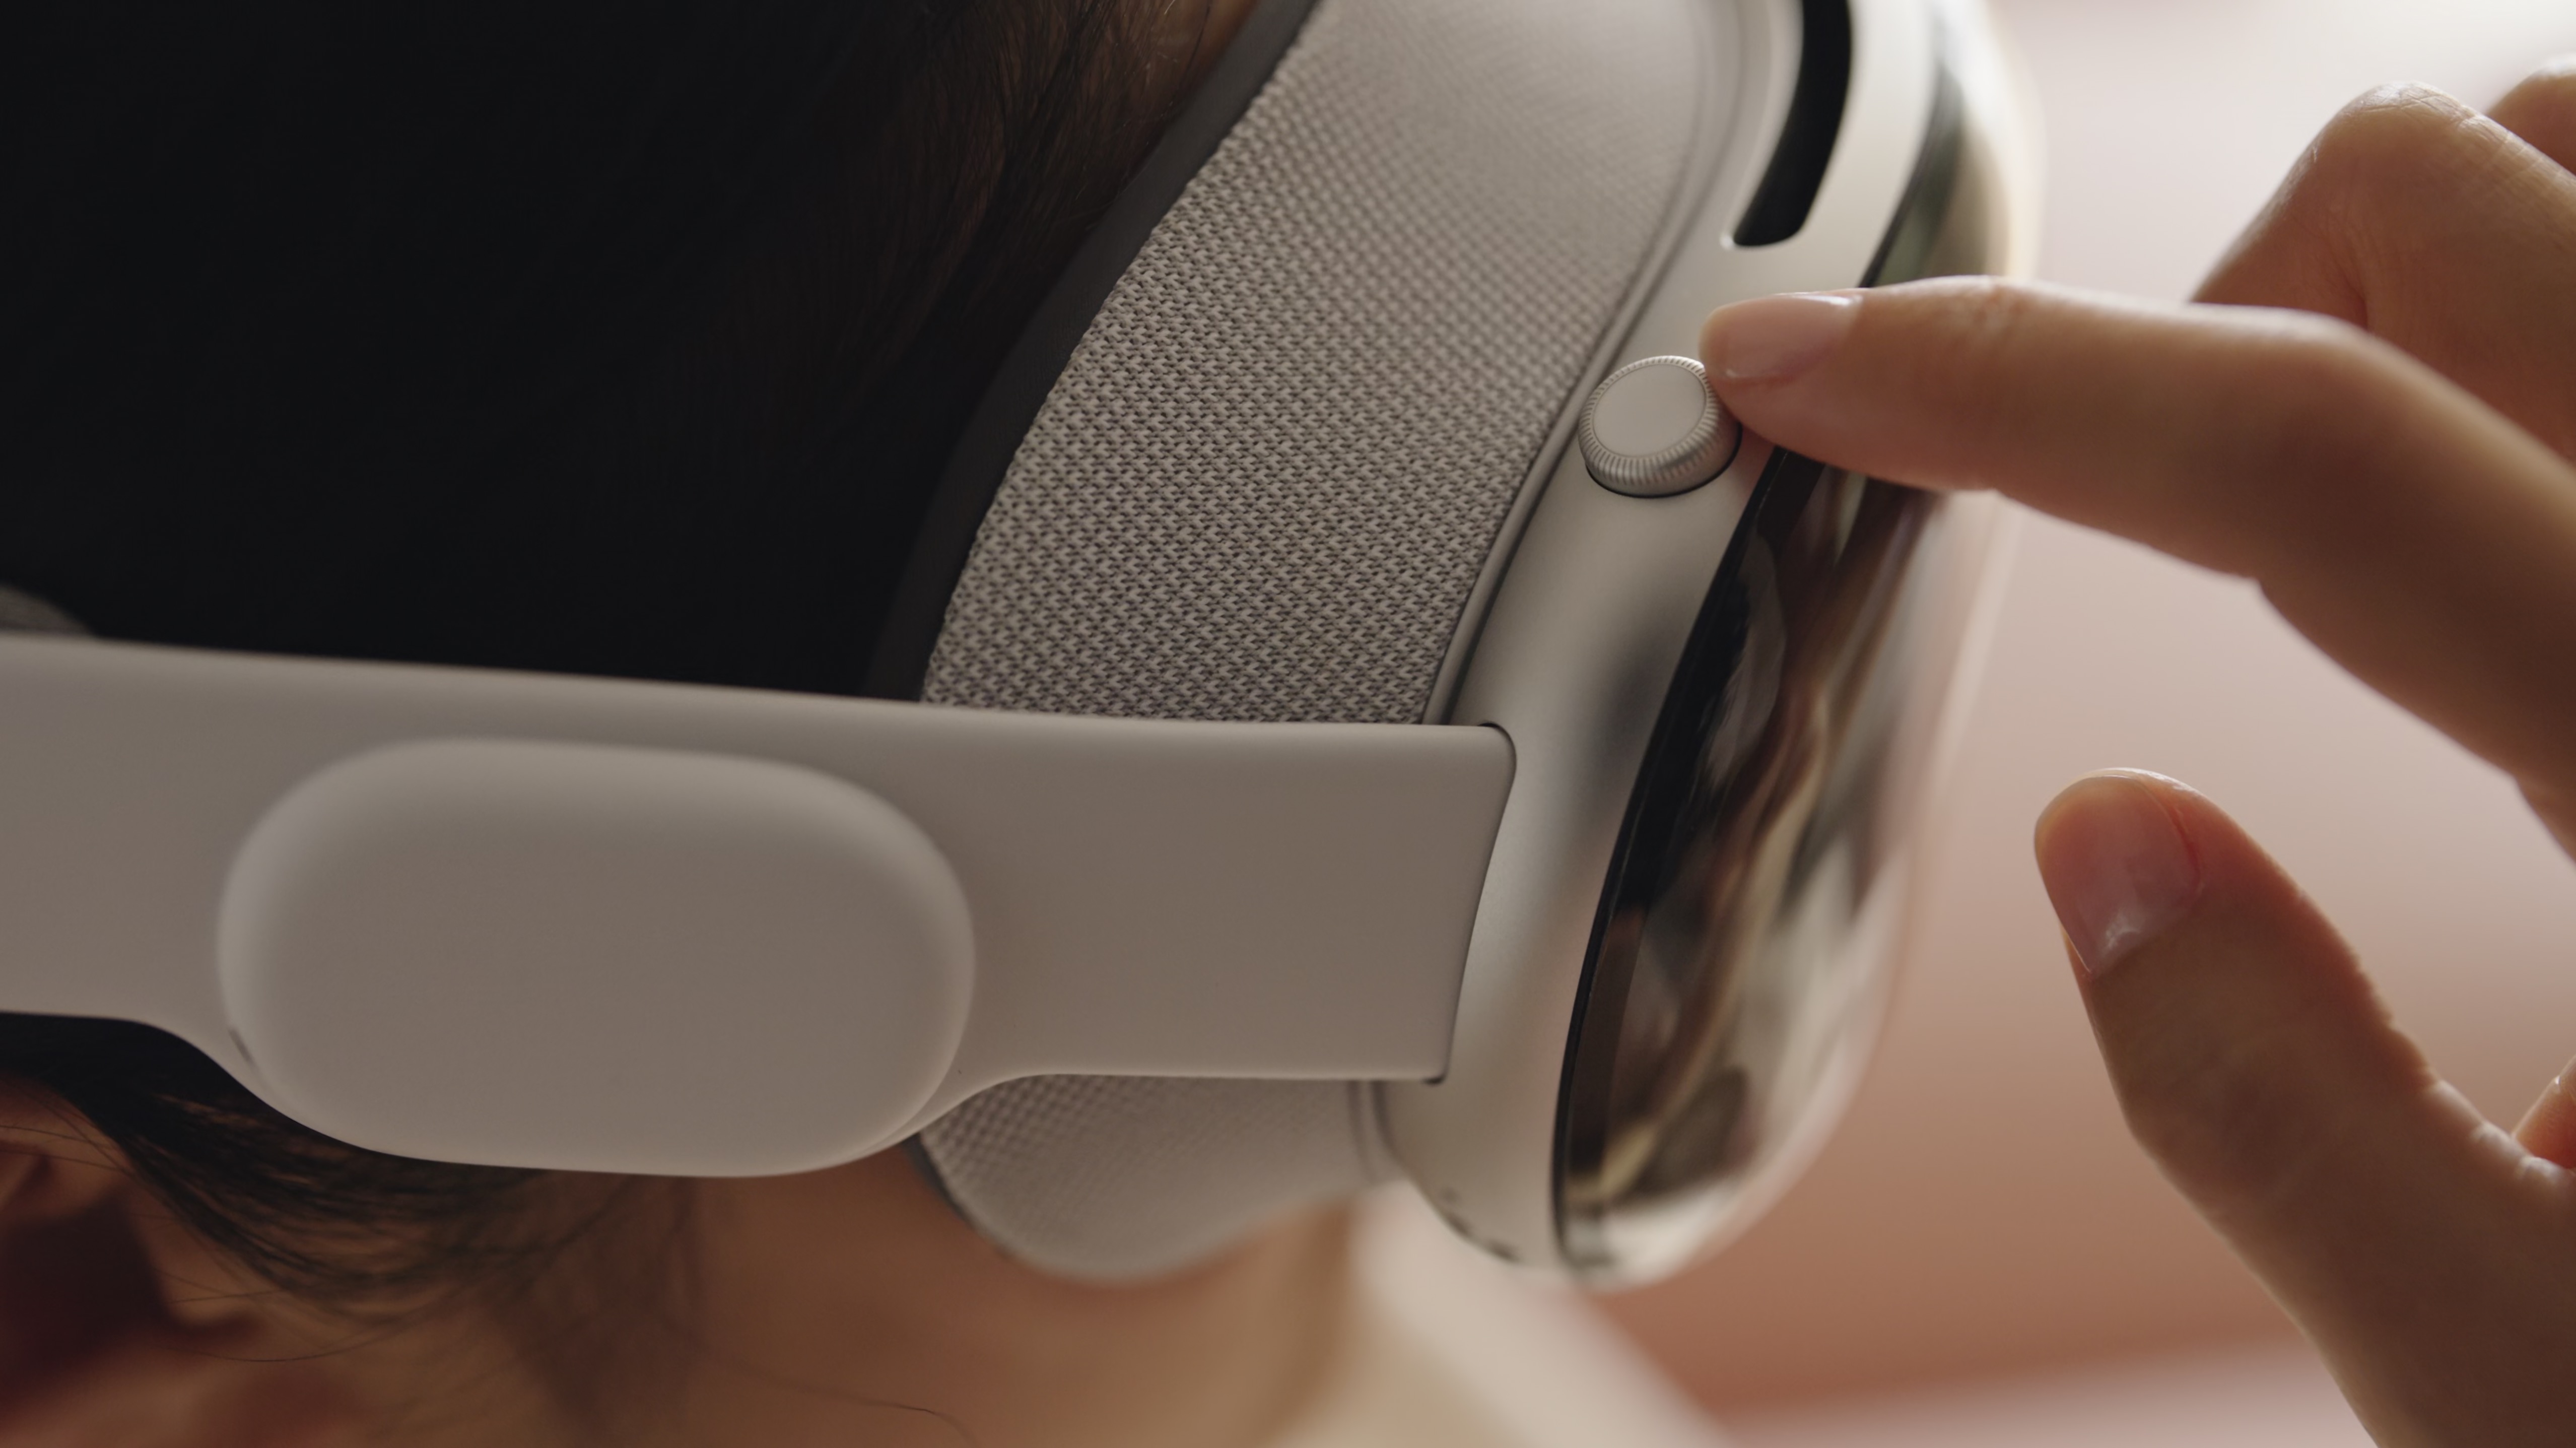 Apple Vision Pro Plays Defense Against Meta Quest VR Headset